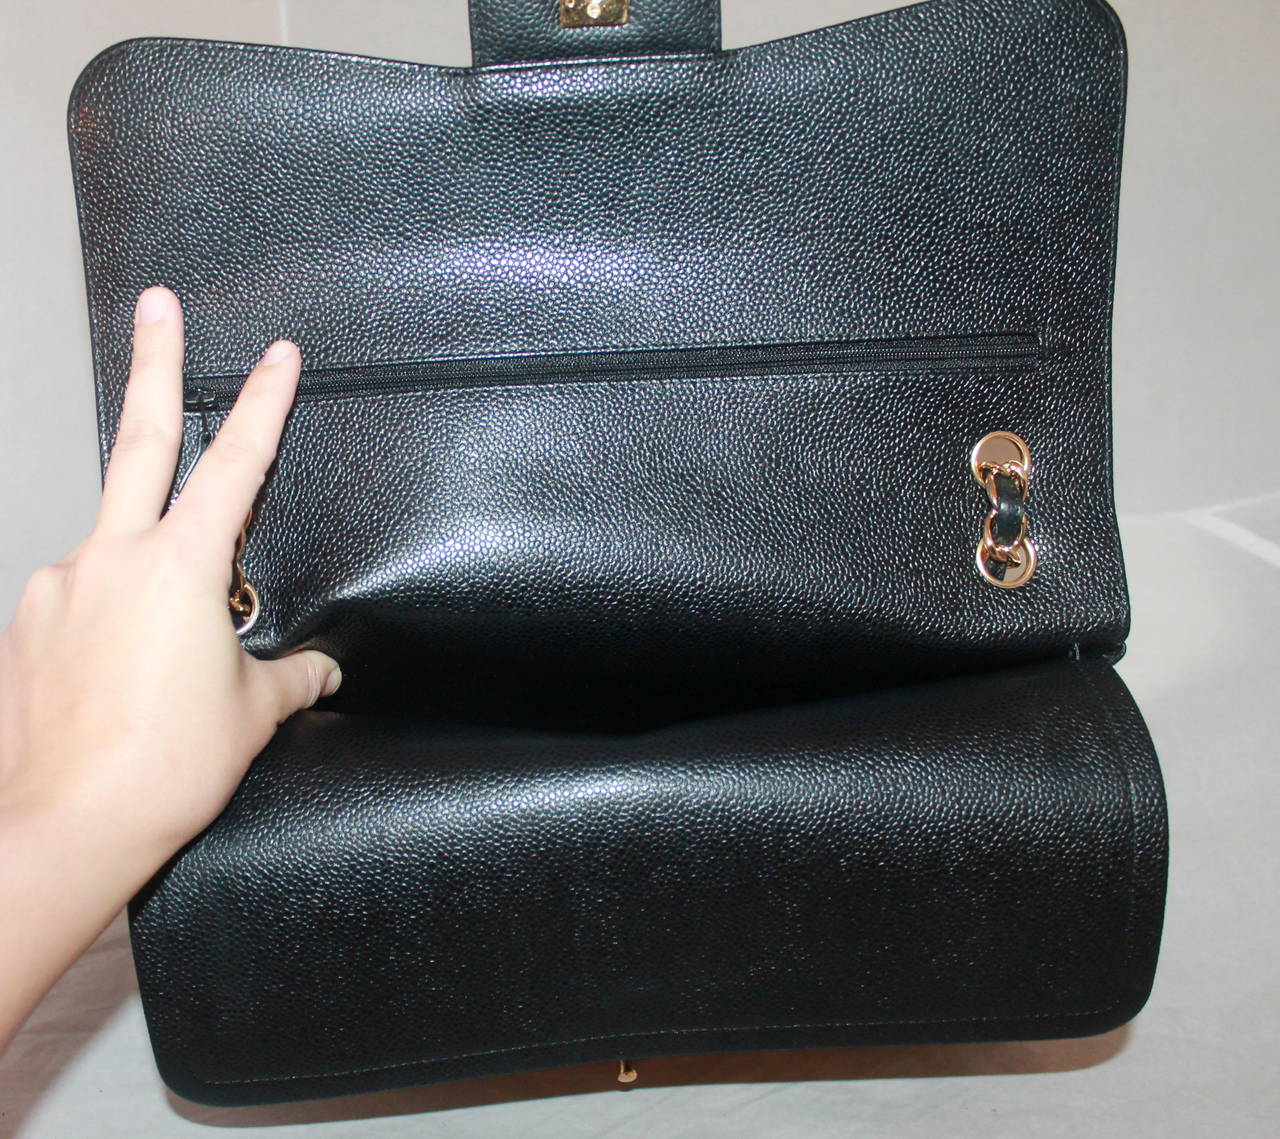 Women's Chanel Black Caviar Jumbo Double Flap Handbag - circa 2014 - NEW WITH BOX